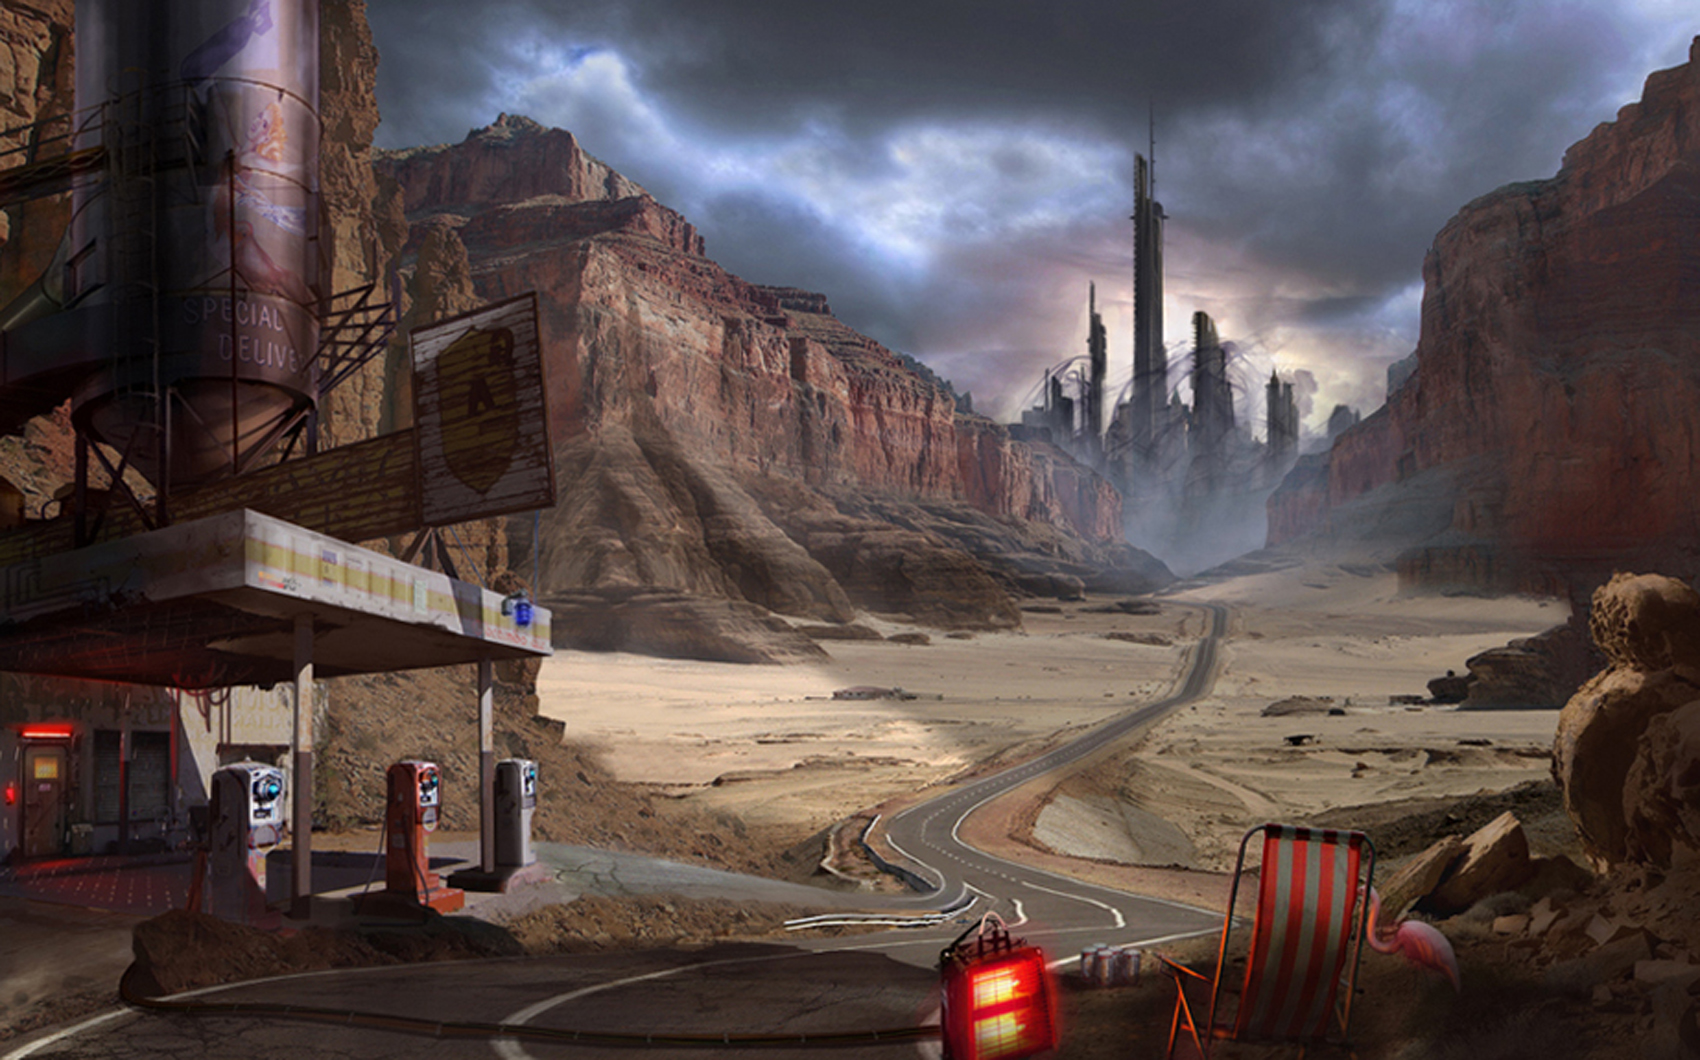 Sci Fi City Wallpaper